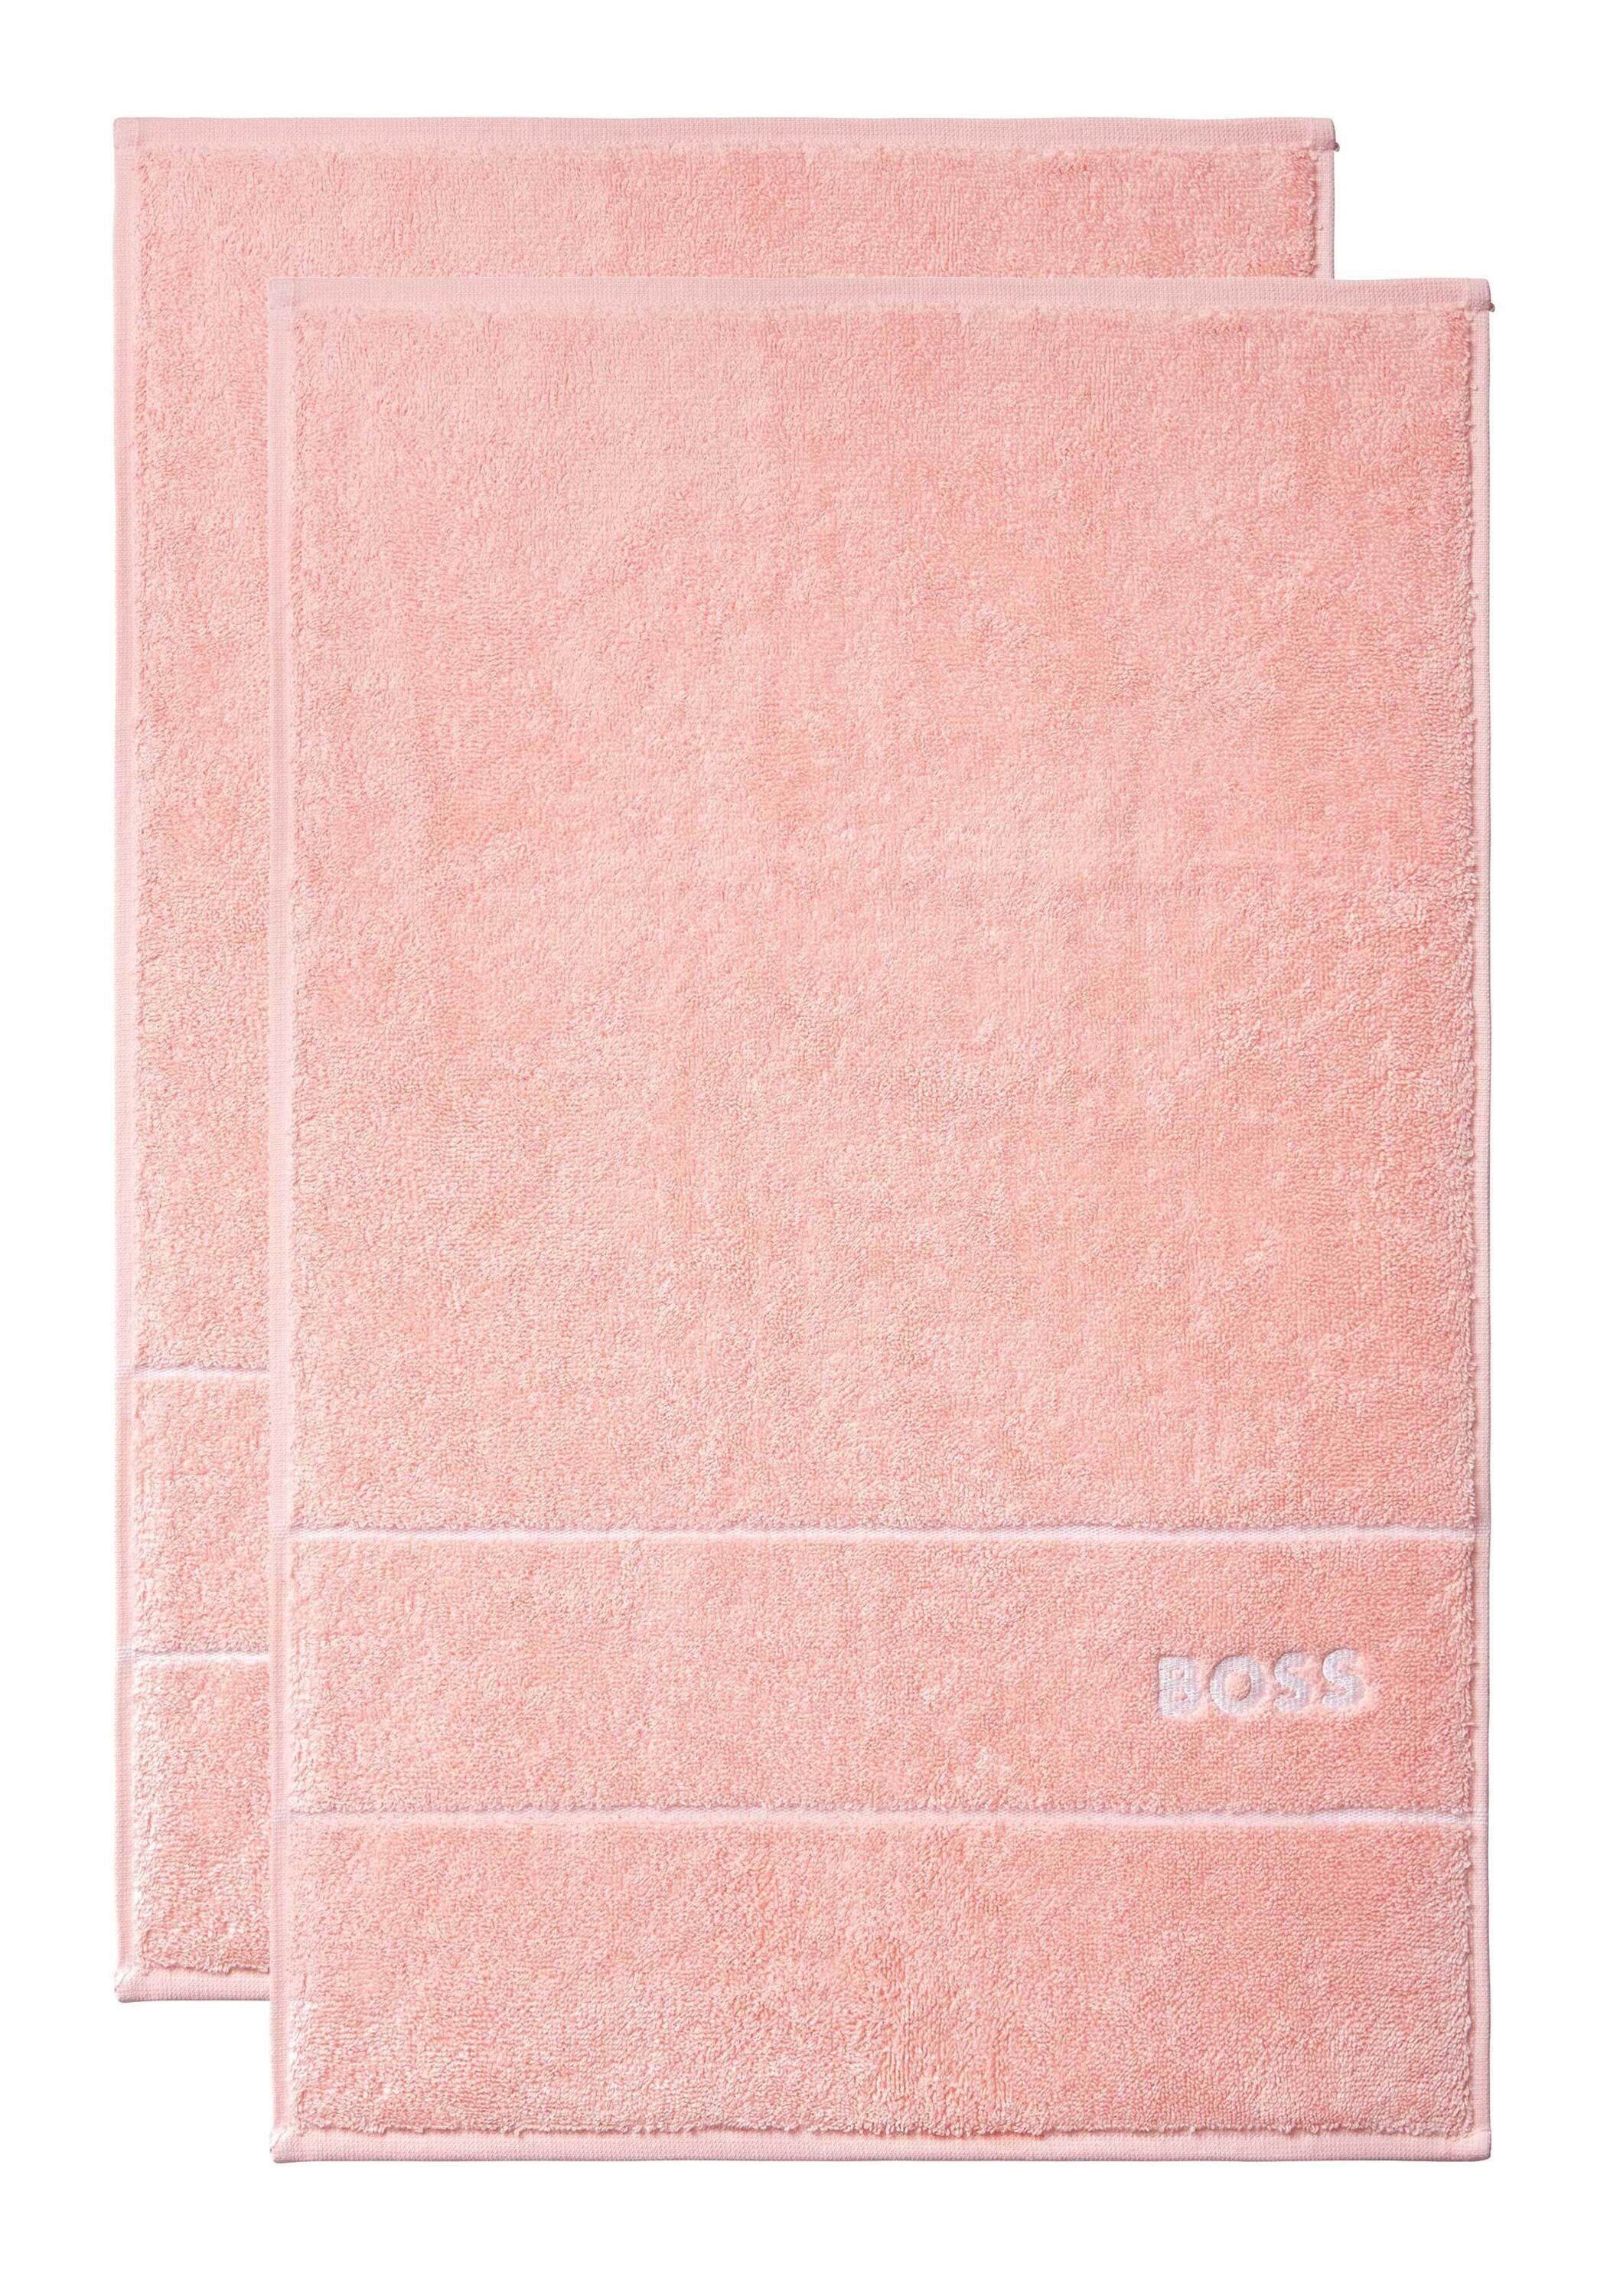 Hugo Boss Home Gästehandtücher PLAIN (2tlg), 100% Baumwolle (2-St), mit modernem Design